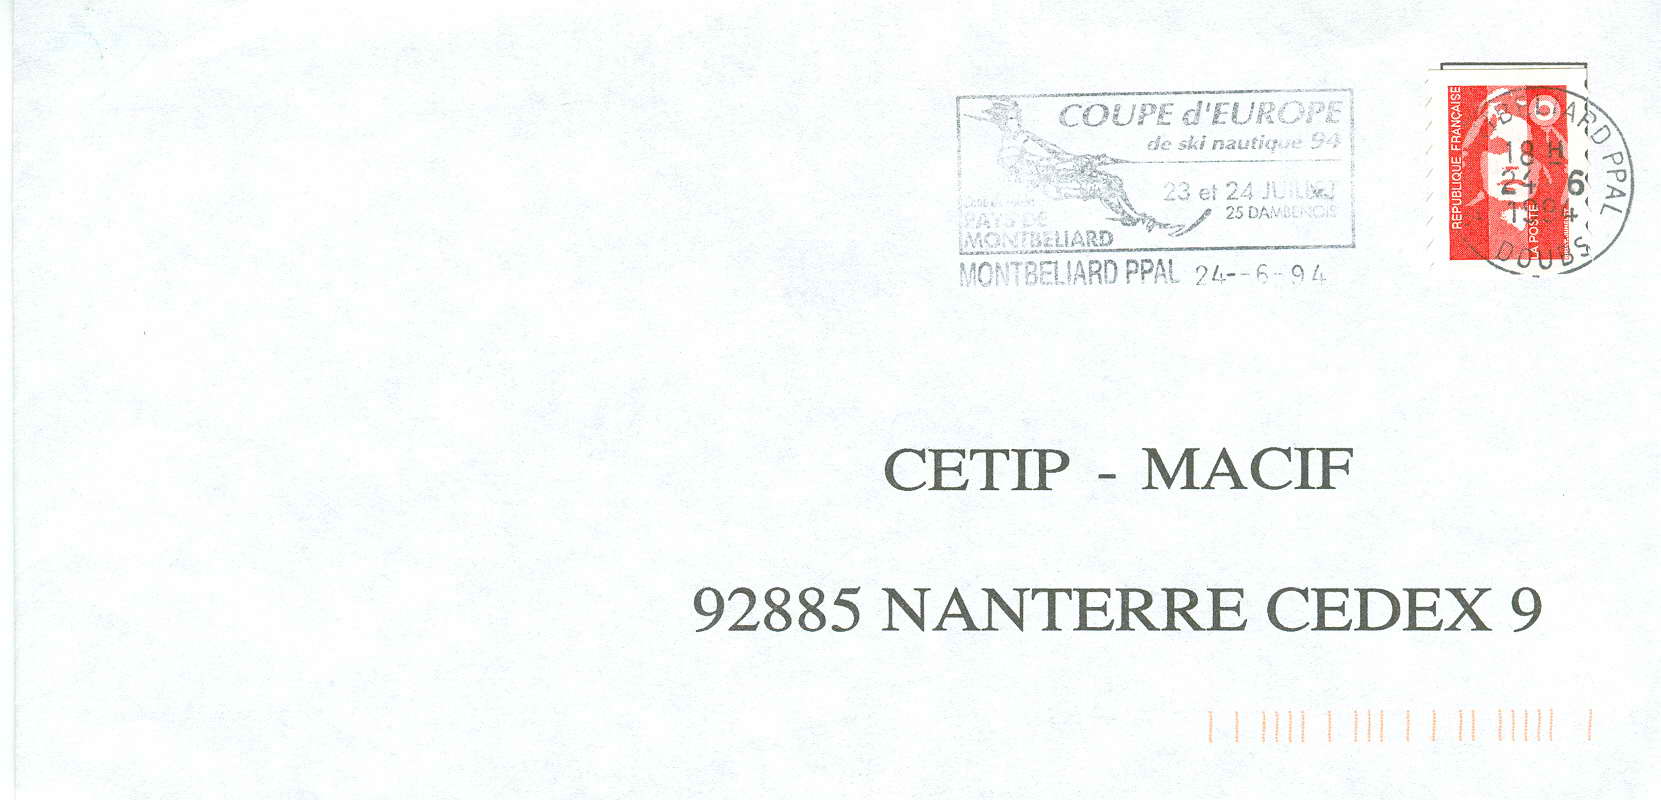 SKI NAUTIQUE FRANCE OBLITERATION TEMPORAIRE 1994 MONTBELIARD COUPE D EUROPE DE SKI NAUTIQUE - Ski Nautique